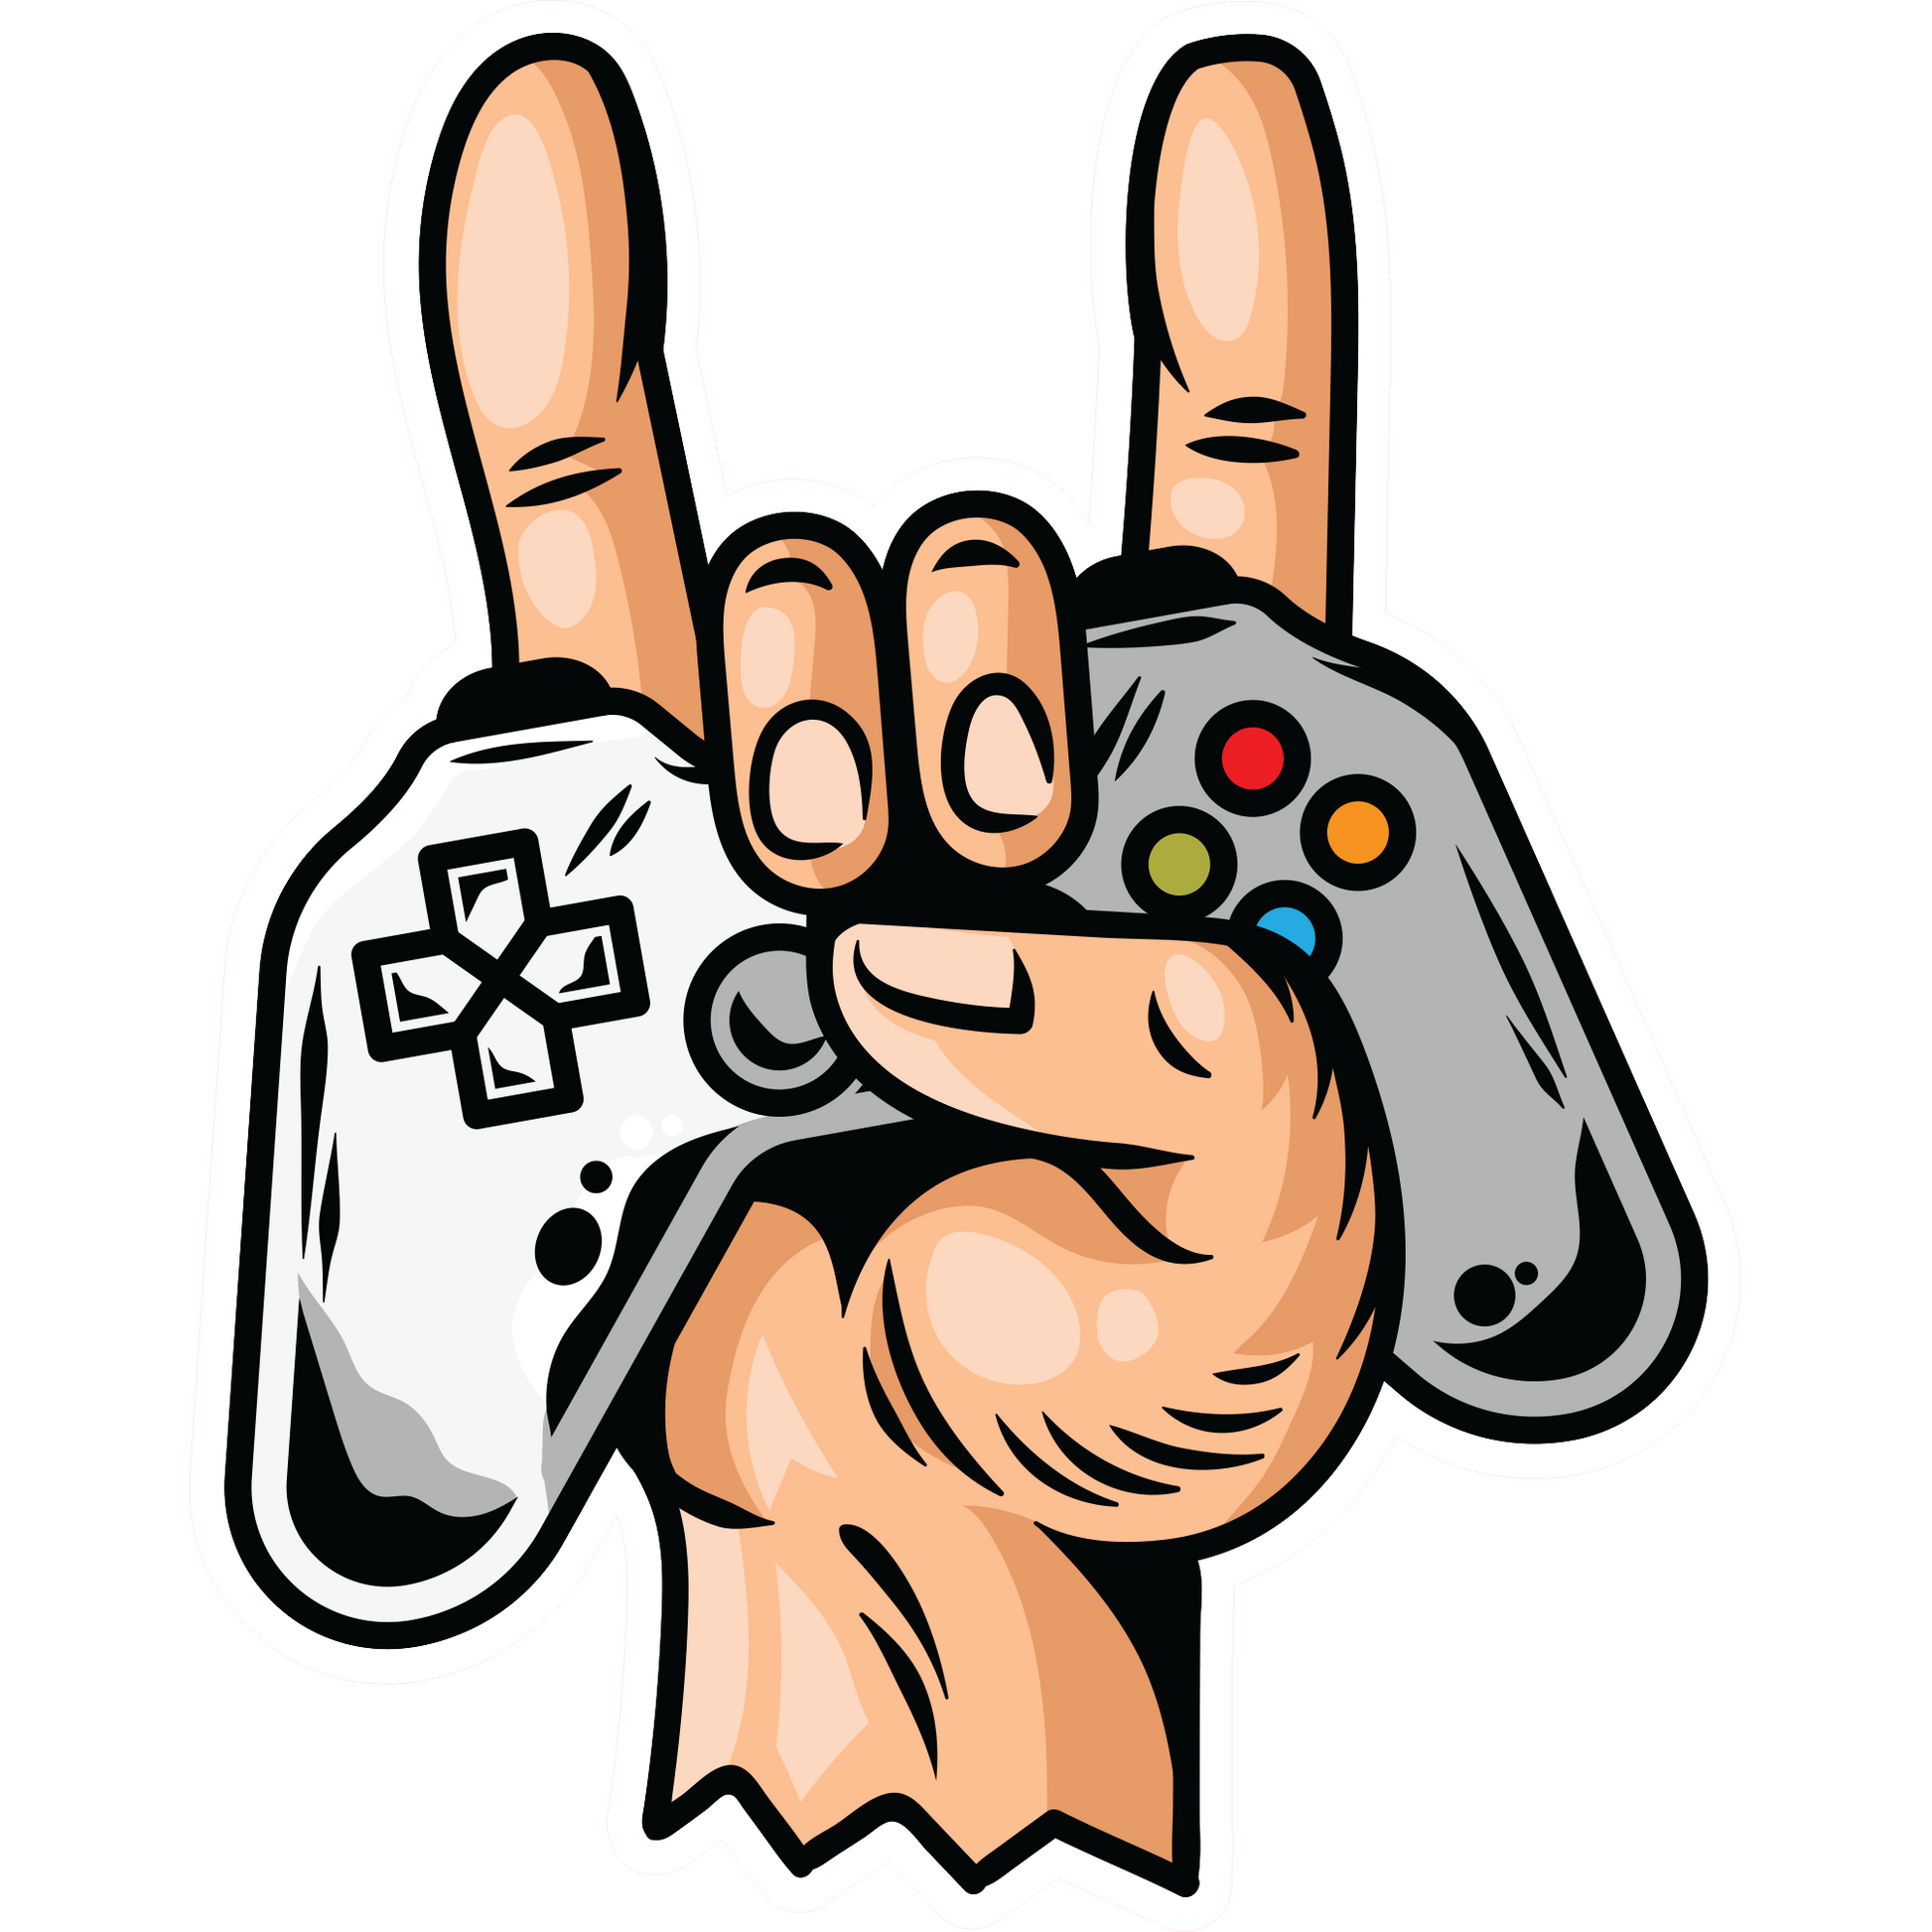 Gamer Hand Rock Sign Sticker - Various Decal